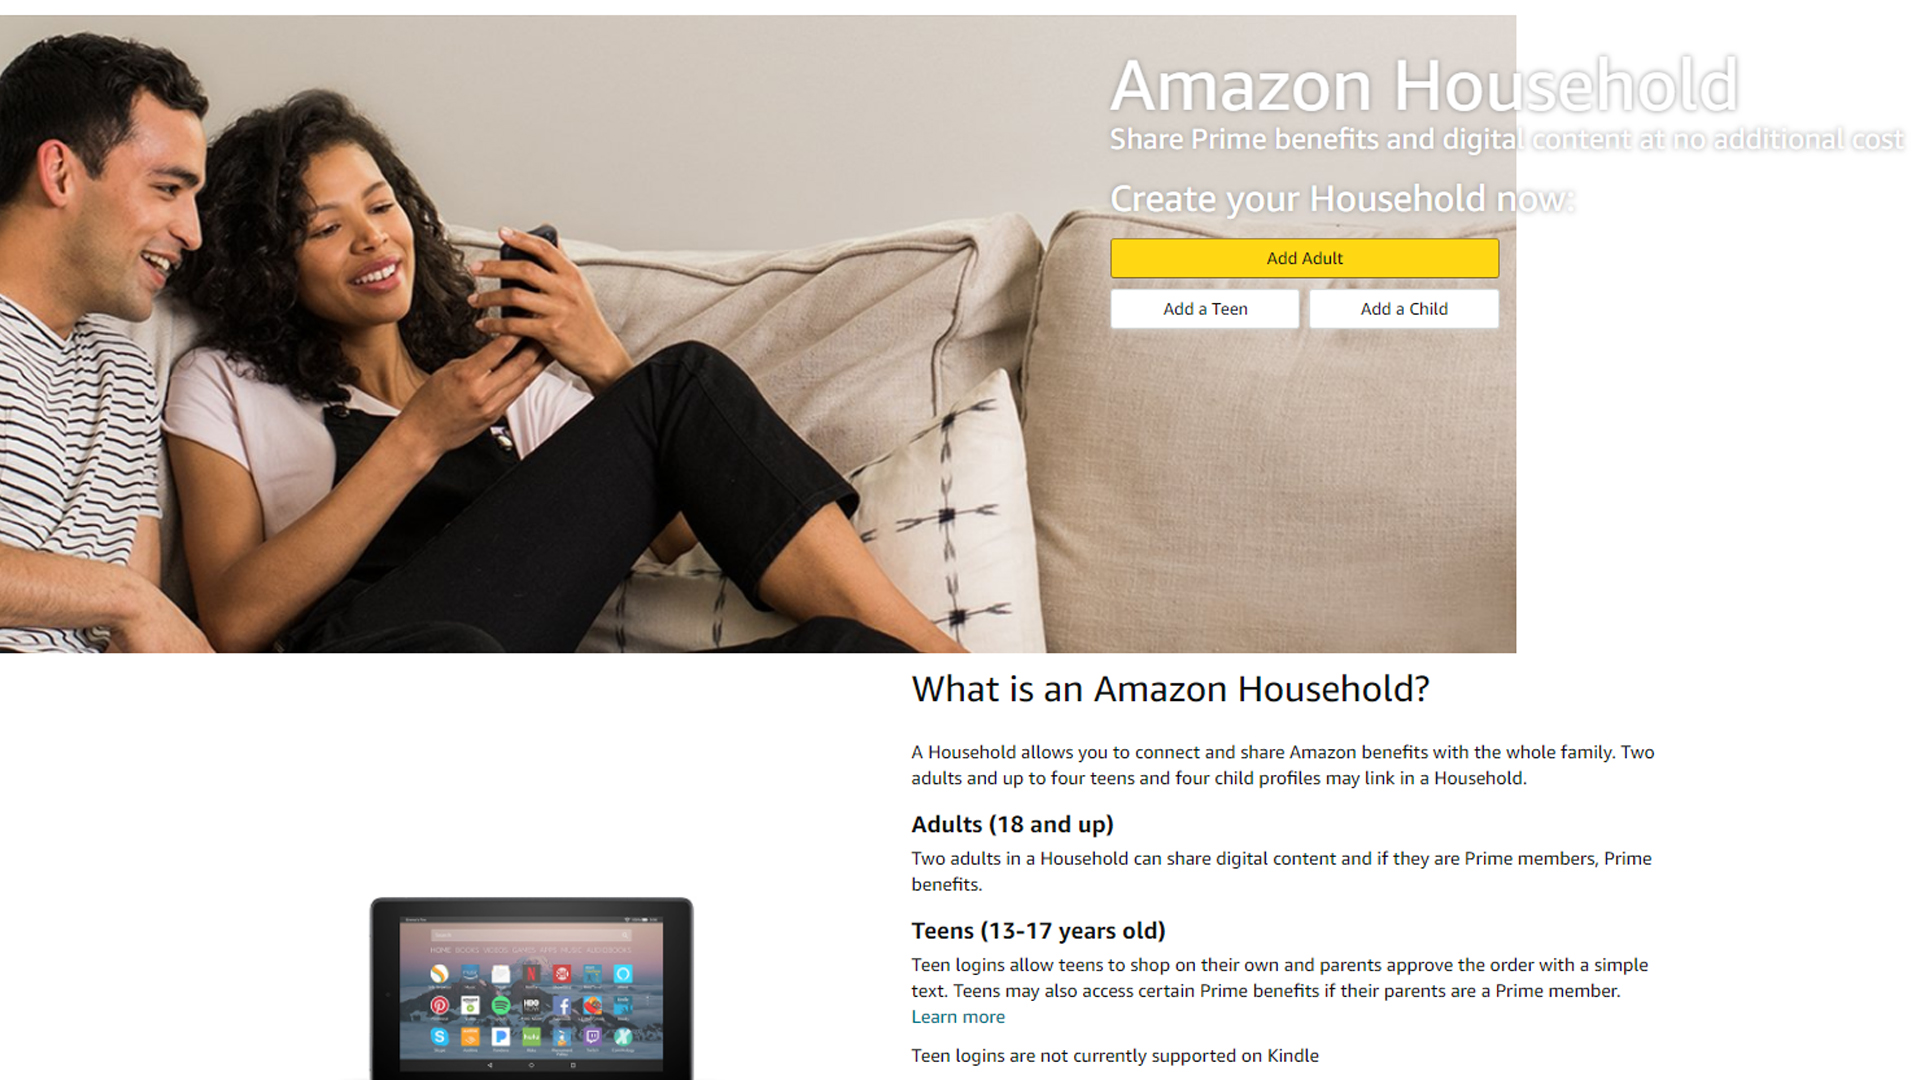 The Amazon Households website.